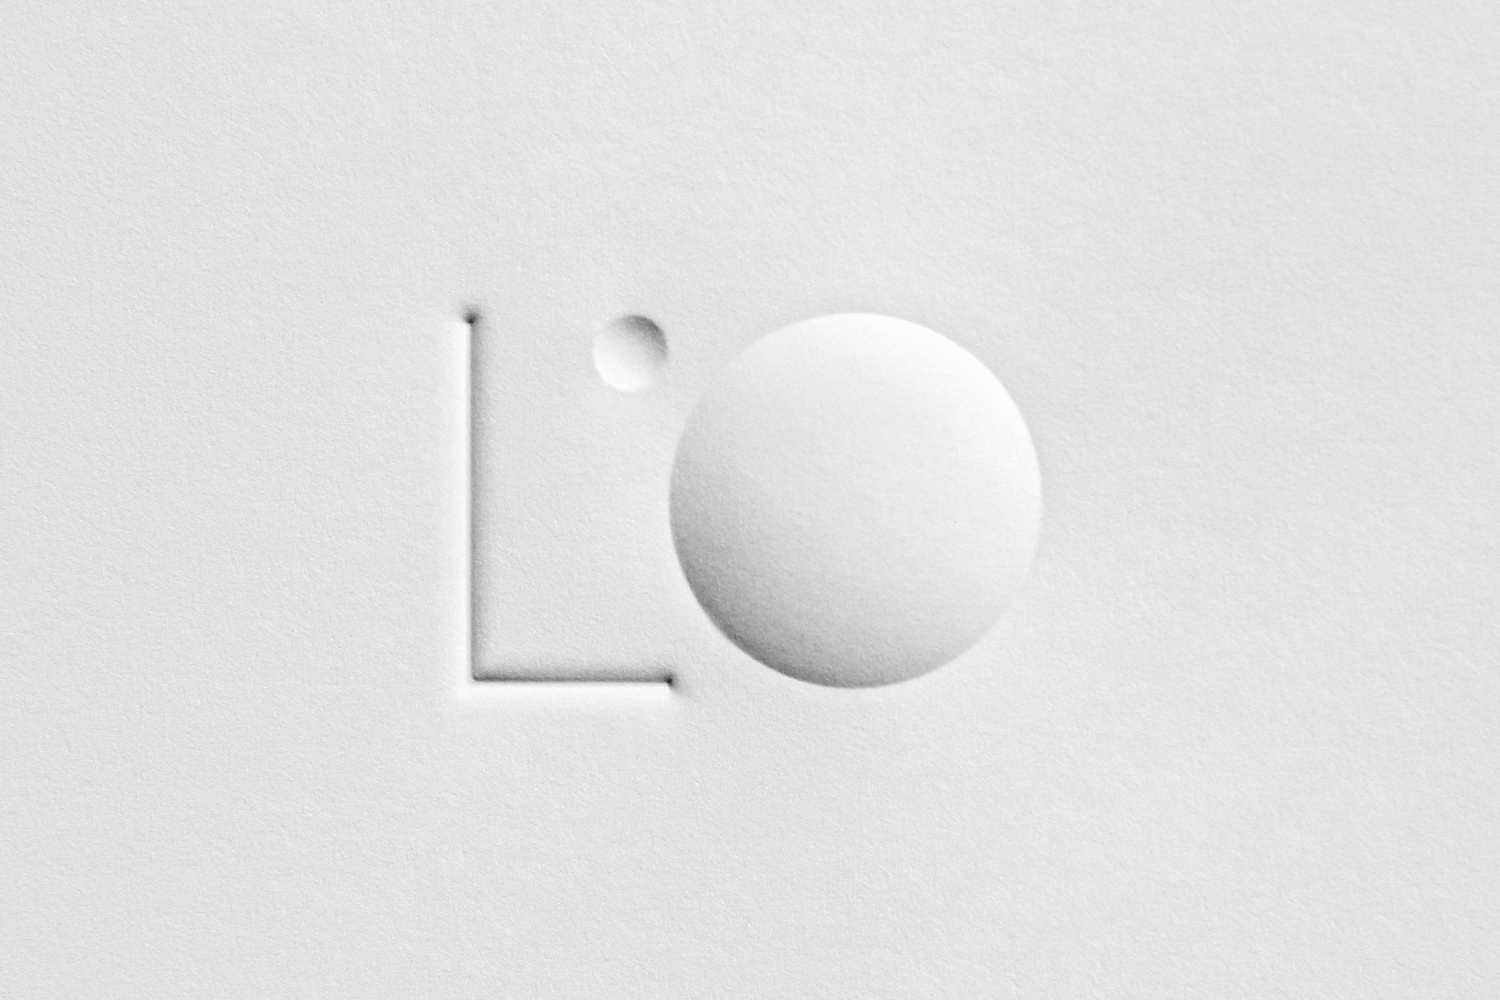 Emboss and deboss logo for lighting specialists L'Observatoire International by New York based design studio Triboro